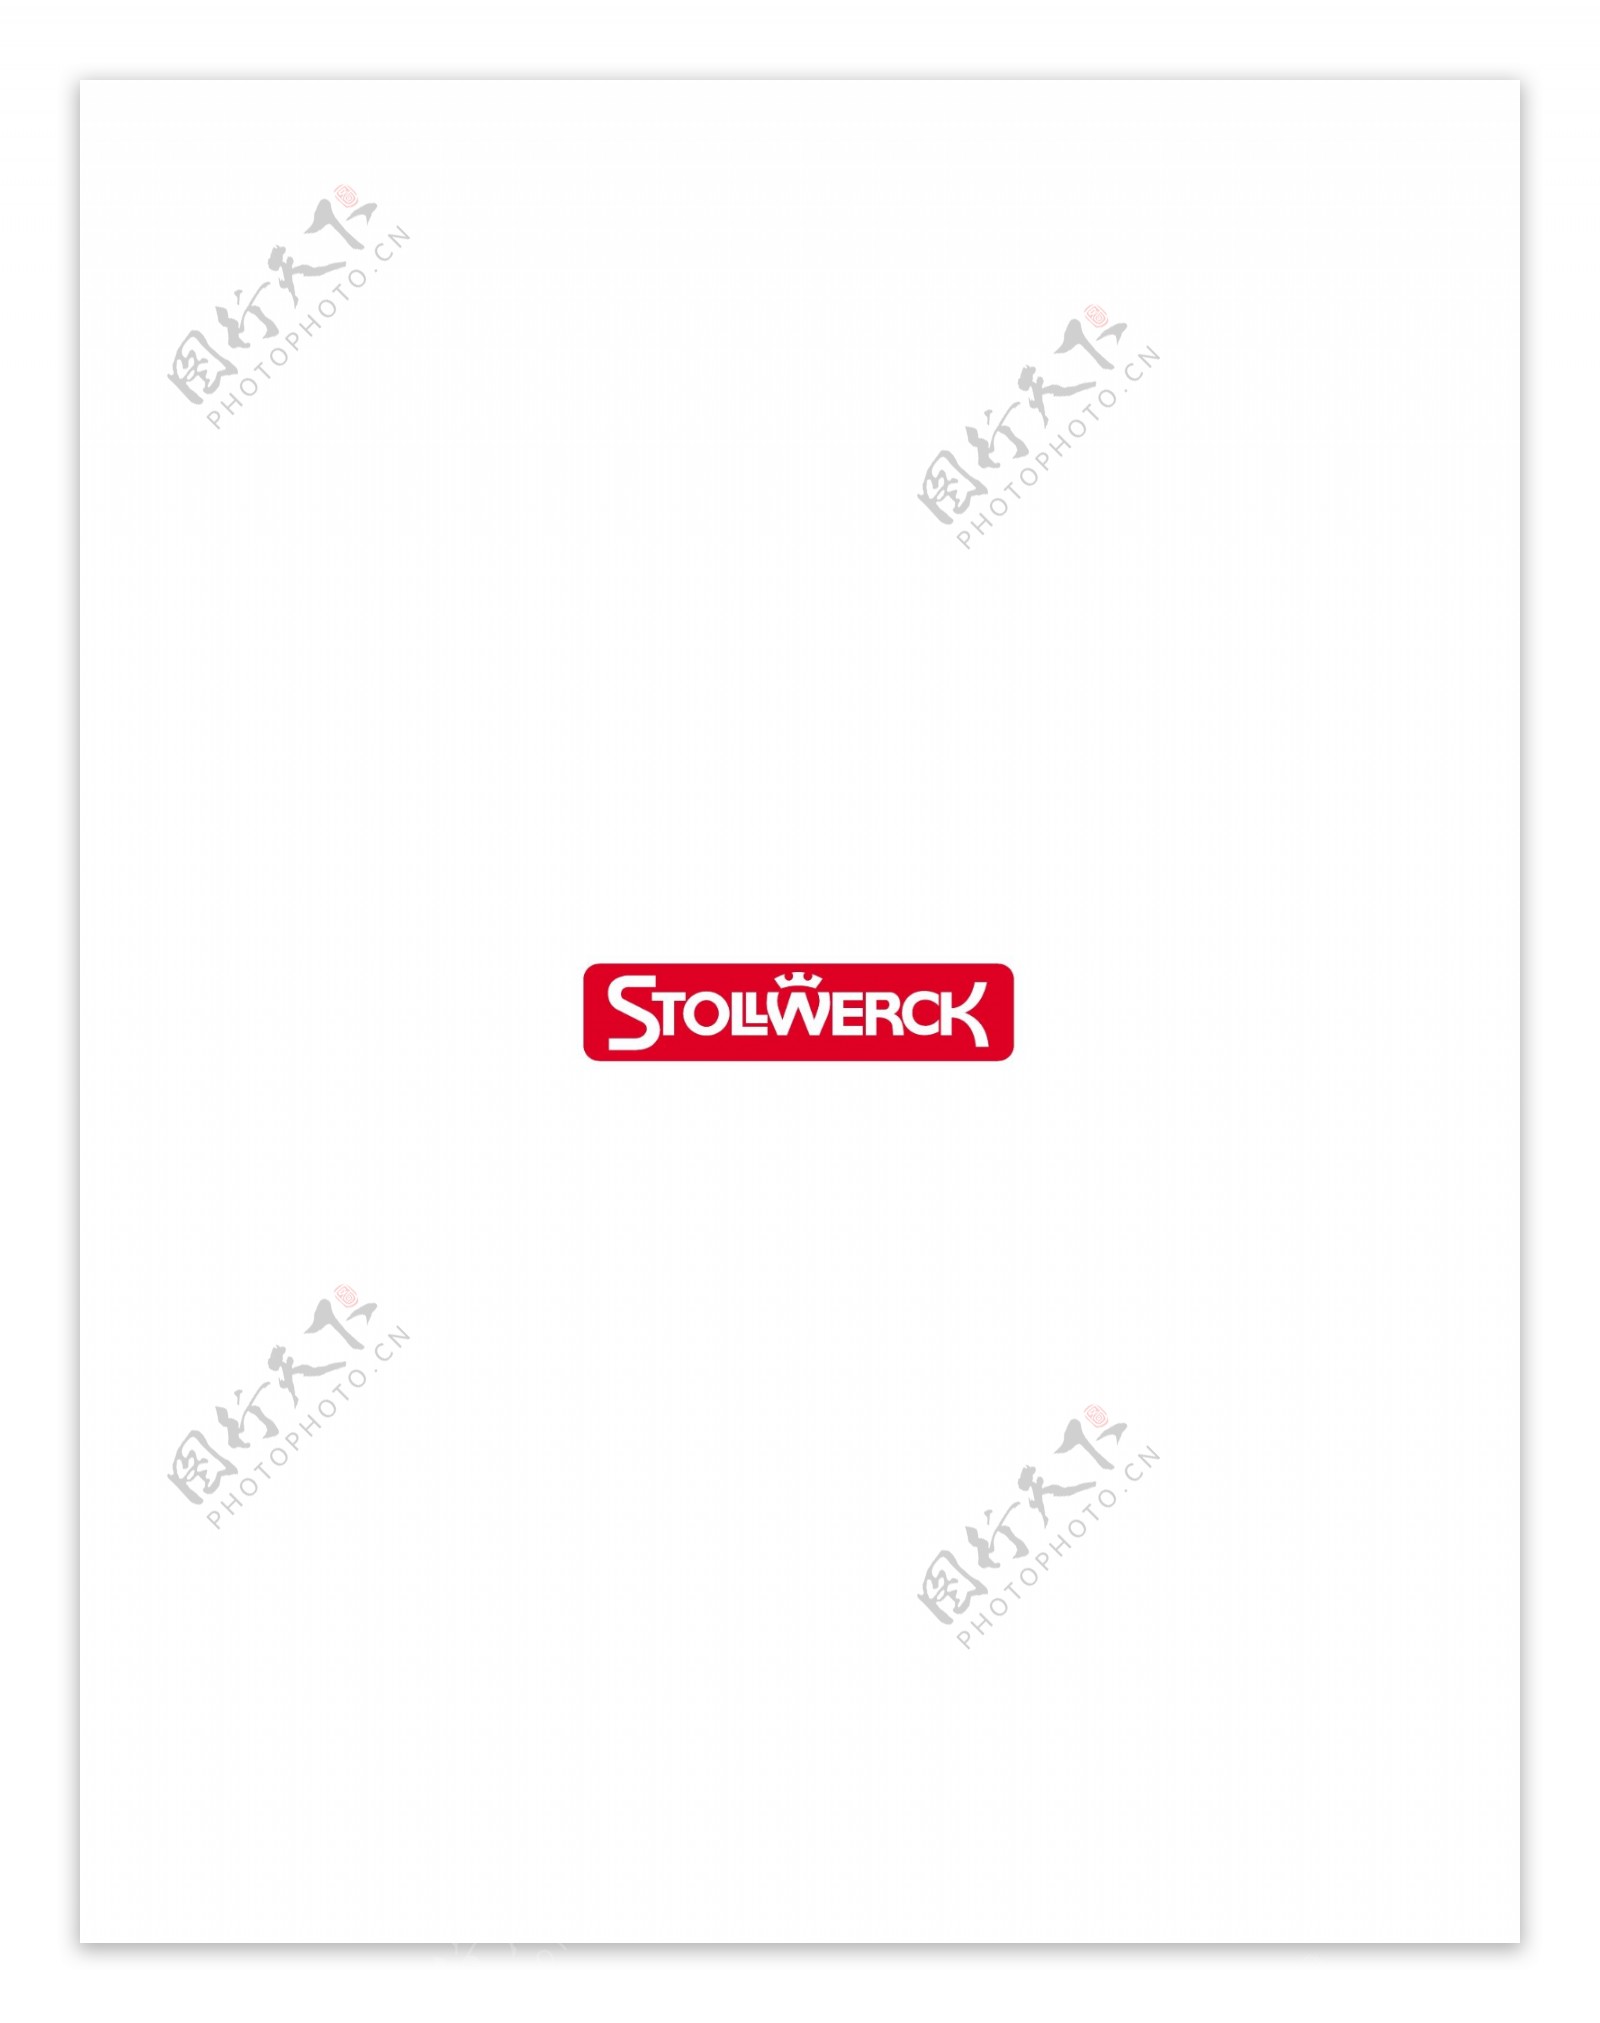 Stollwercklogo设计欣赏足球队队徽LOGO设计Stollwerck下载标志设计欣赏